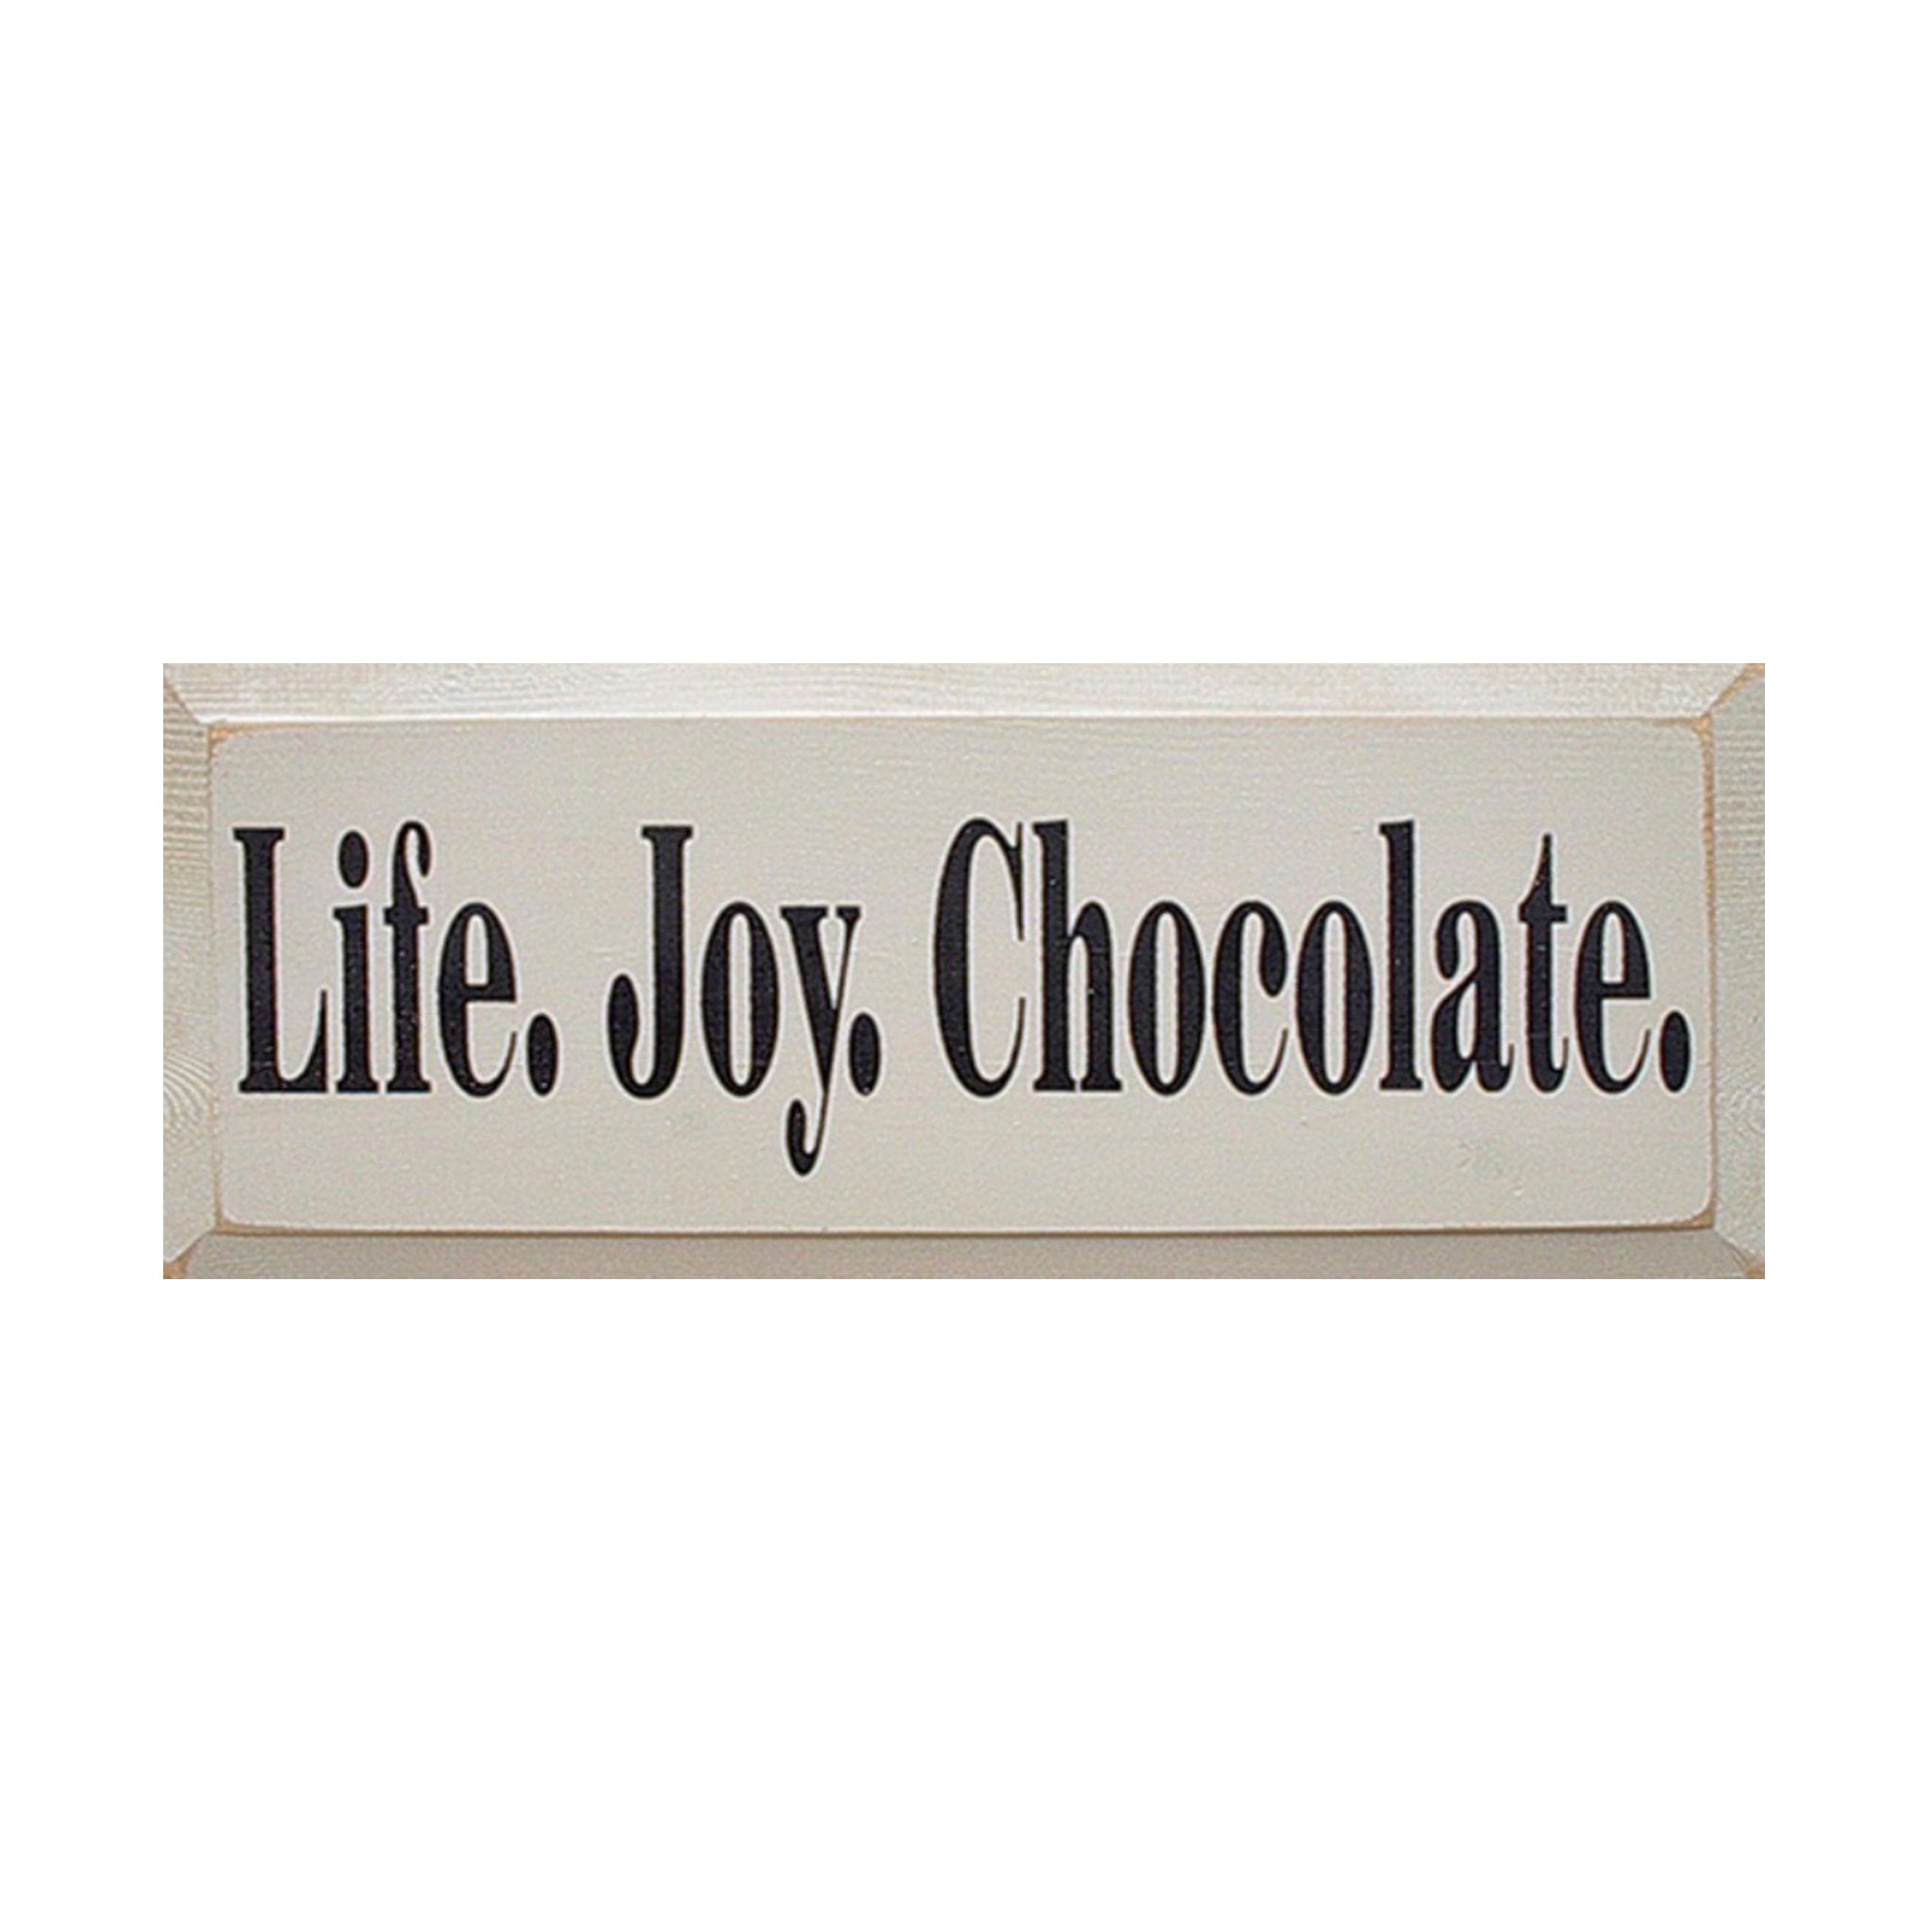 Life. Joy. Chocolate Large Rustic Wood Sign - 7